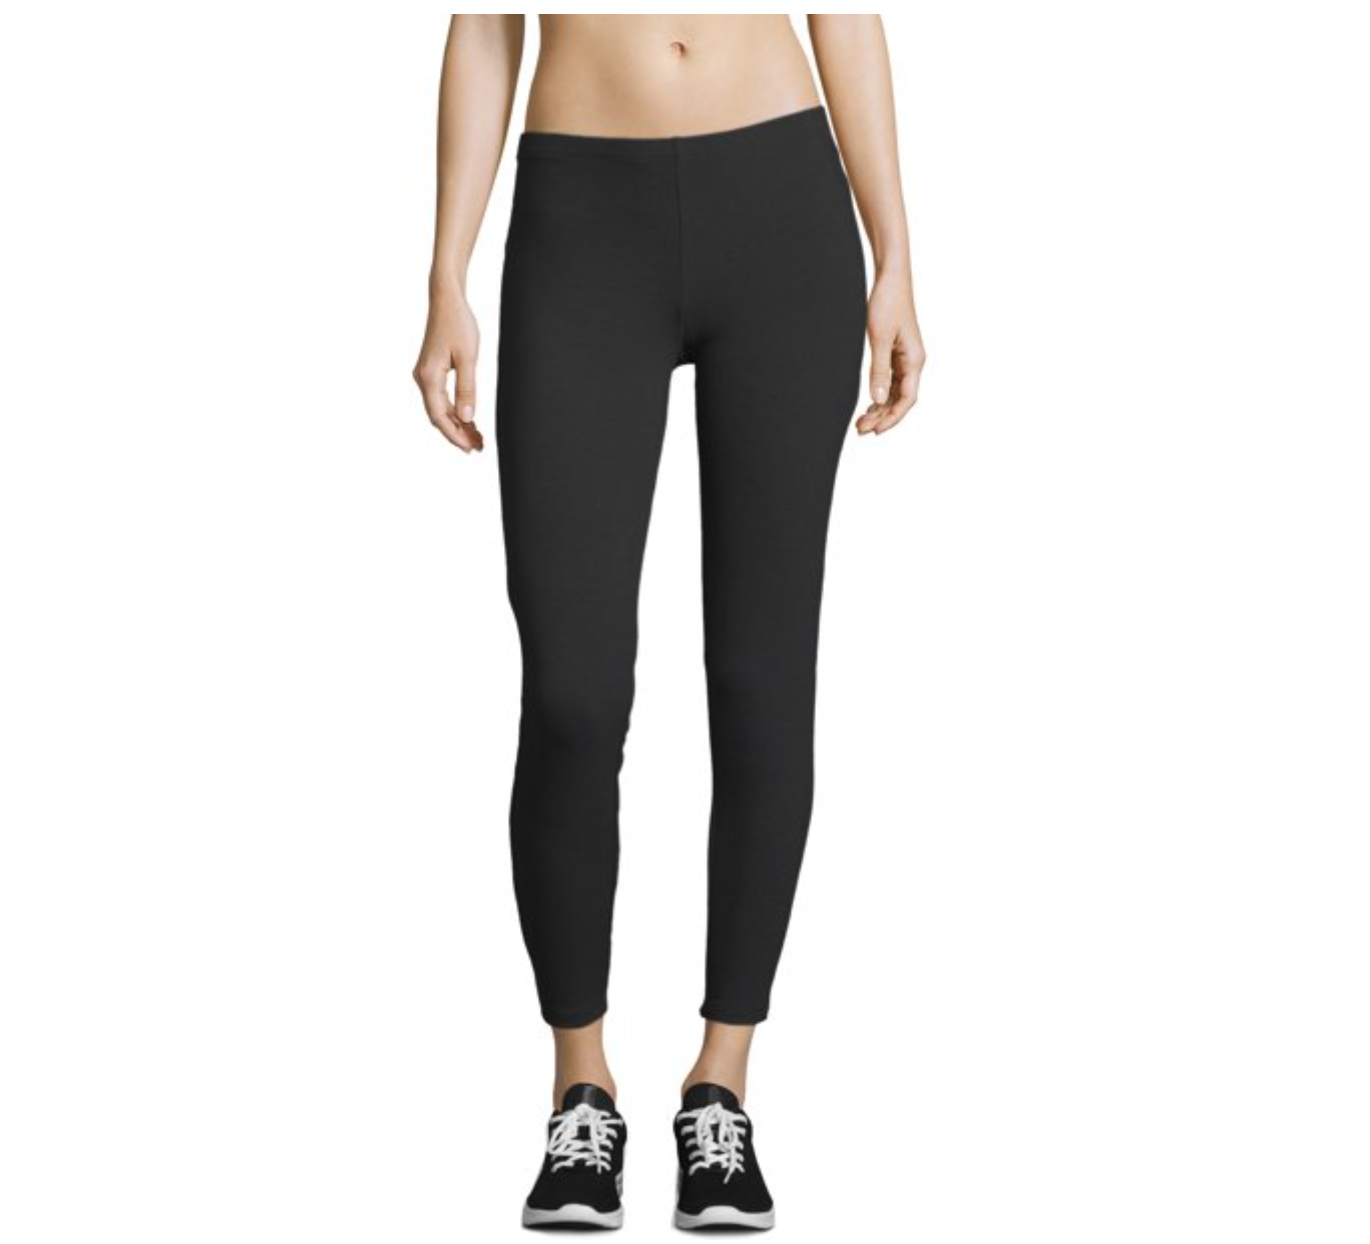 Avia Women's cropped leggings NEW- XXL(20)  Cropped leggings, Workout pants  black, Black and white leggings